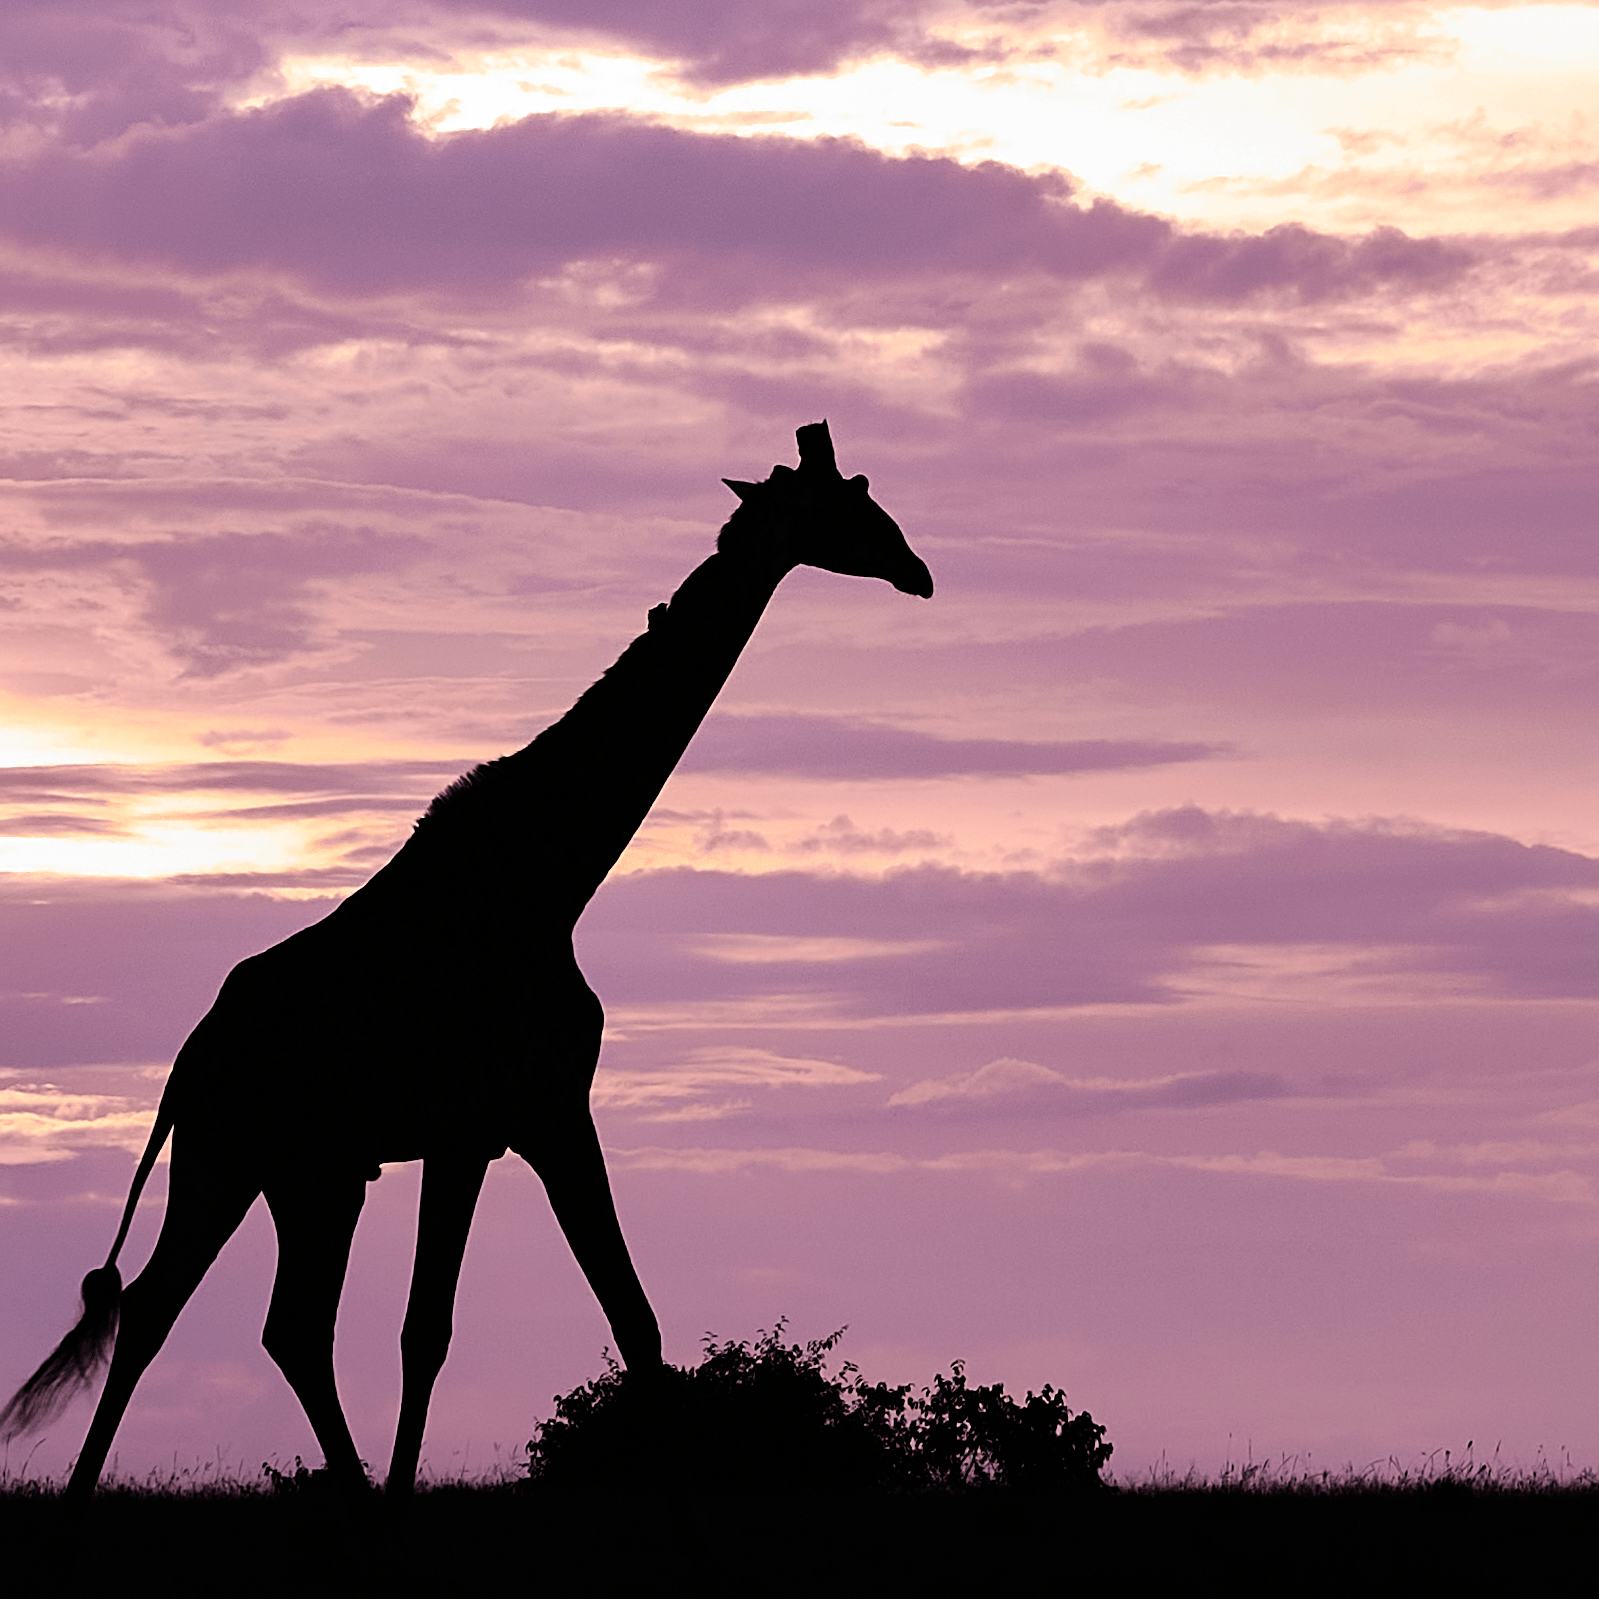 A photograph of a large giraffe accompanied by smaller giraffes at sunset.